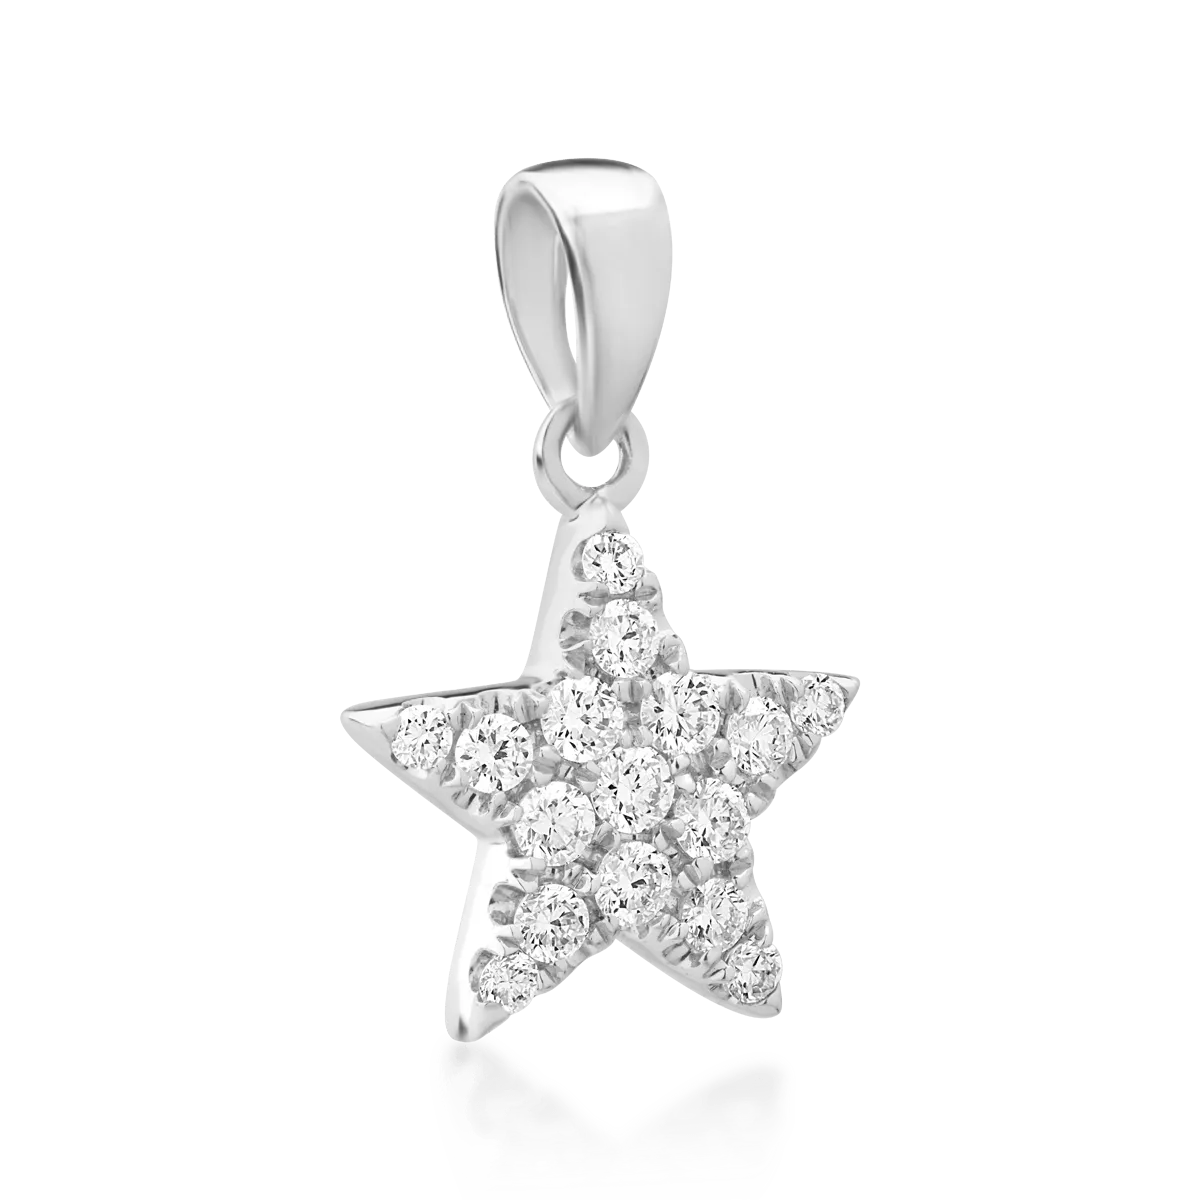 14K white gold star pendant with 0.17ct diamonds